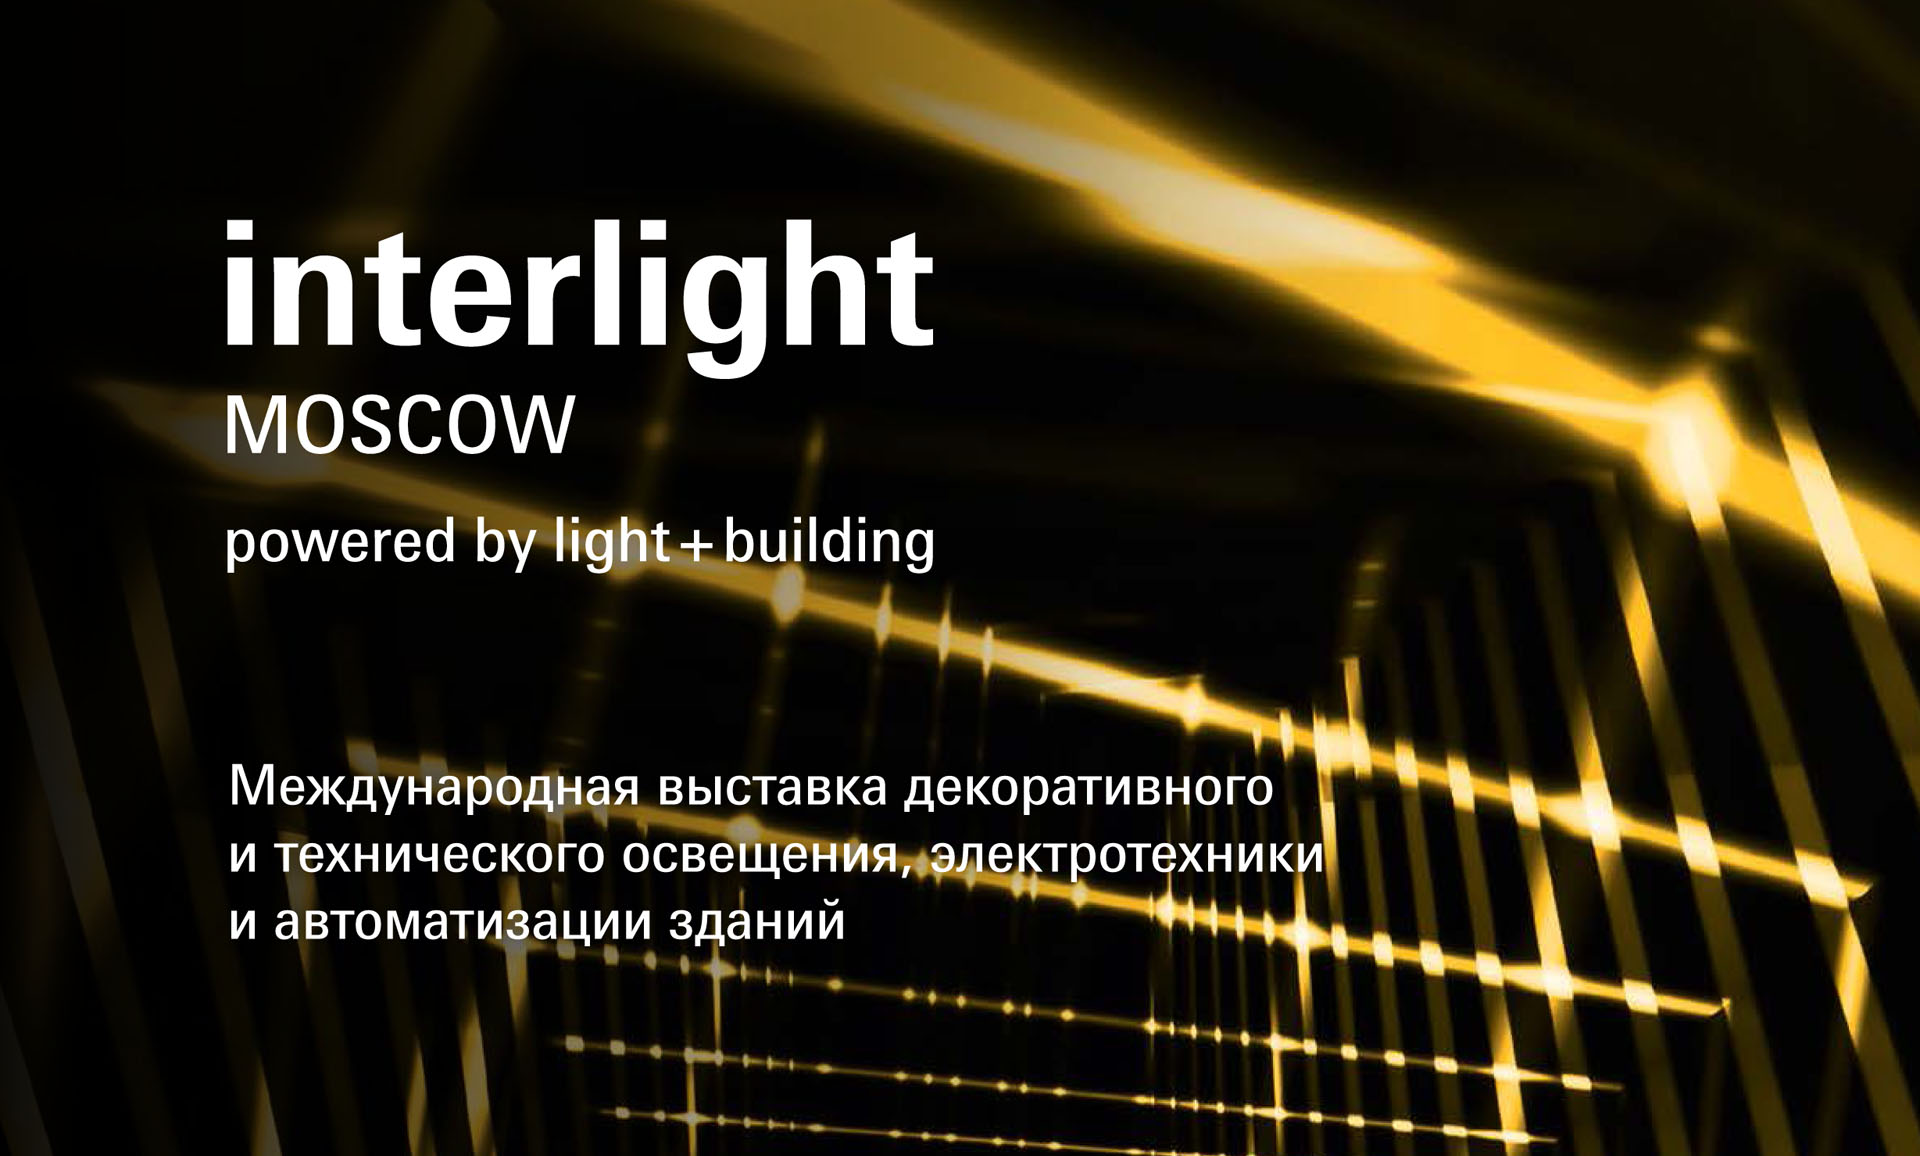 Едем на выставку Interlight Moscow 2018